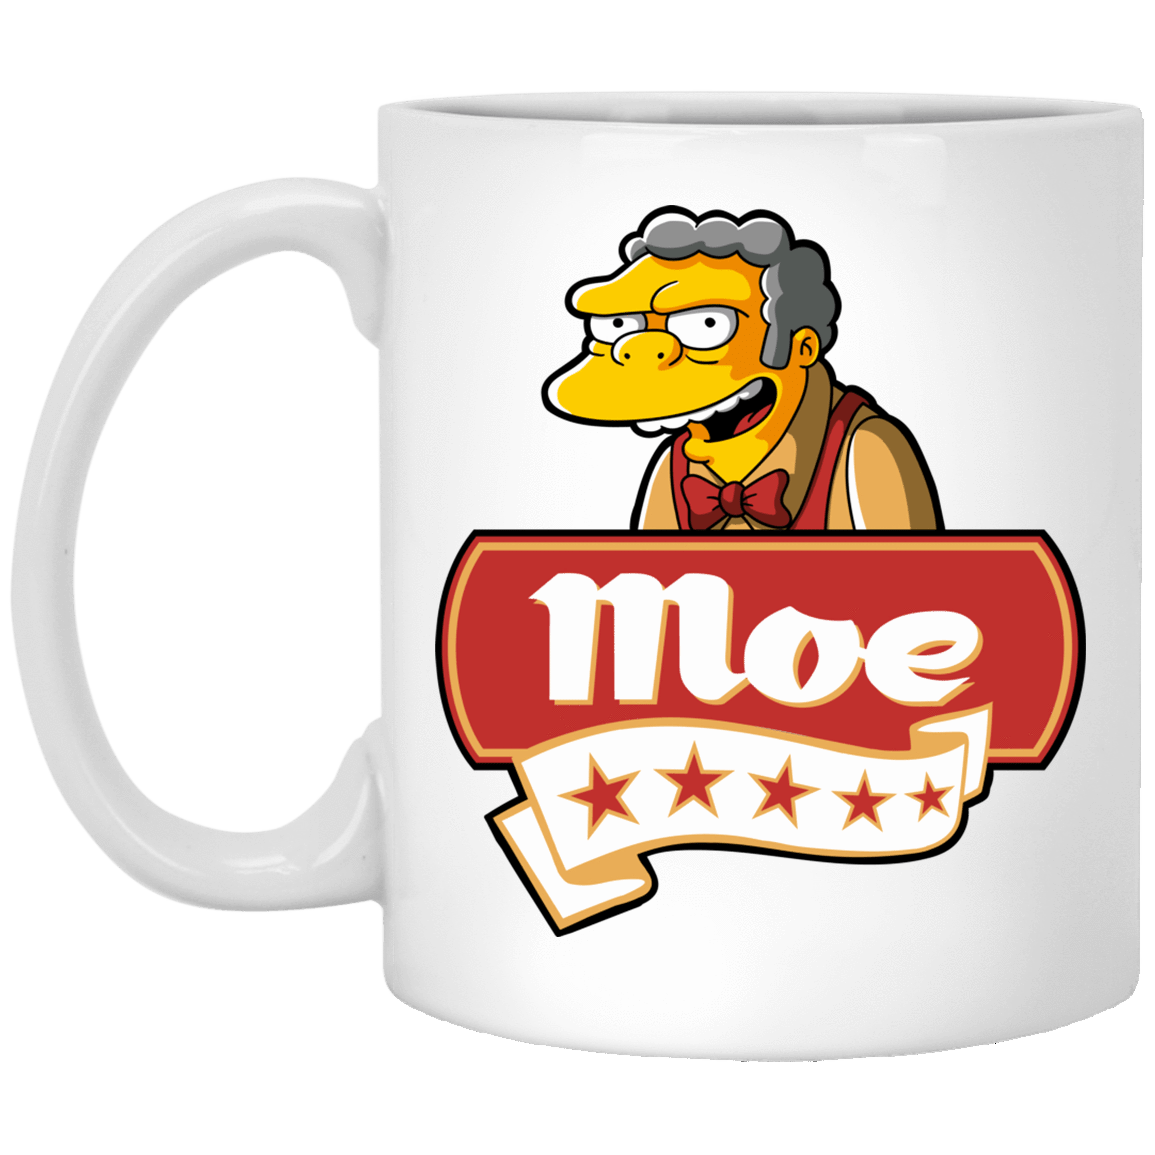 Drinkware White / One Size Moe Five Stars 11oz Mug